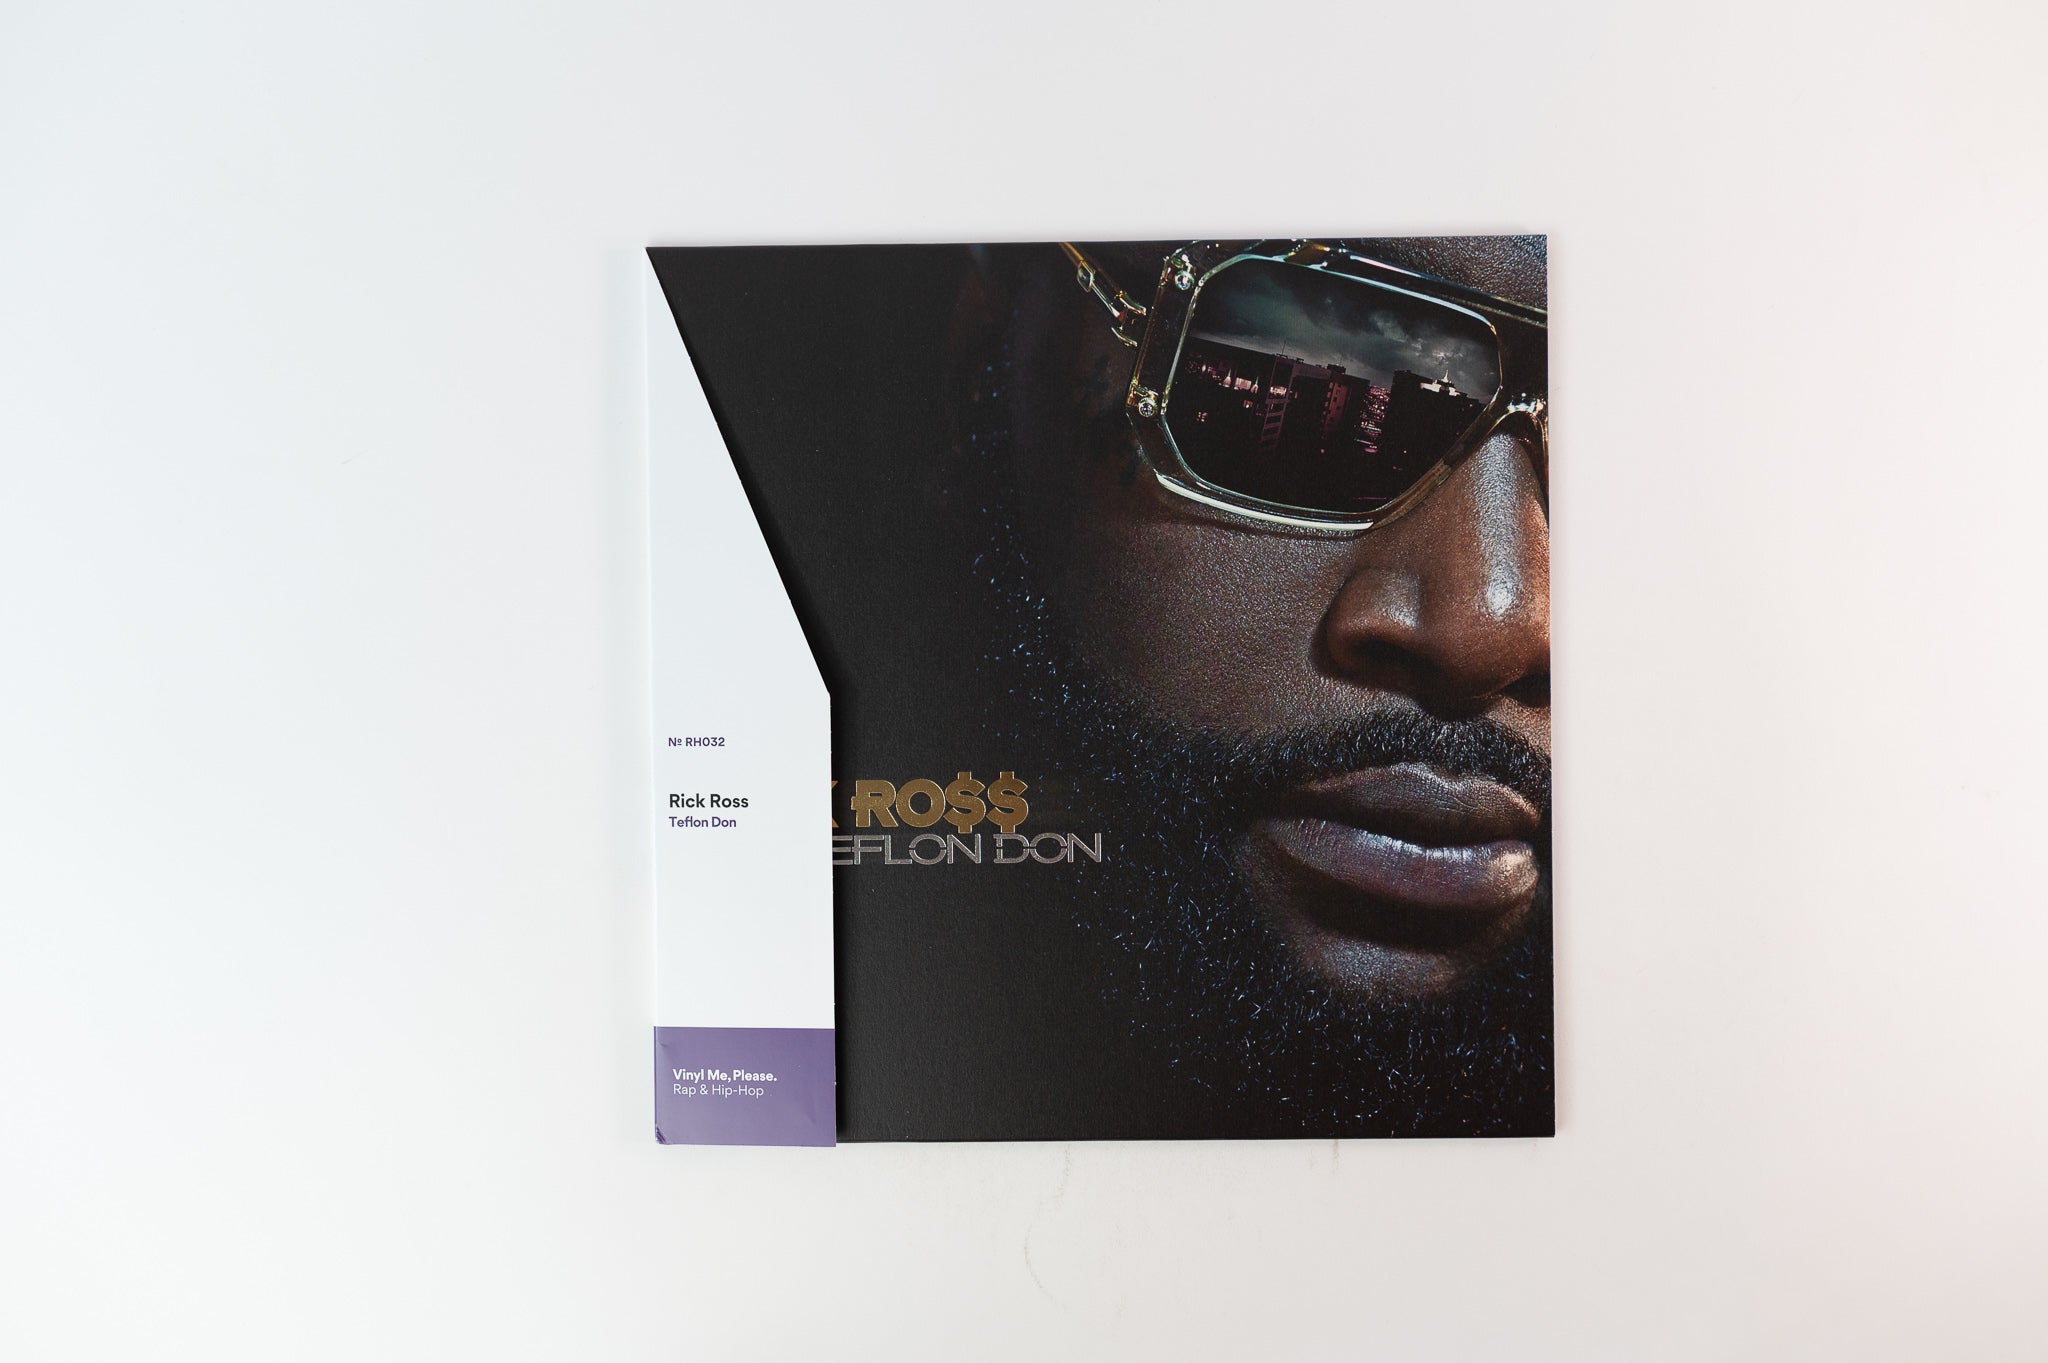 Rick Ross - Teflon Don on Vinyl Me Please Black and Gold Galaxy Reissue